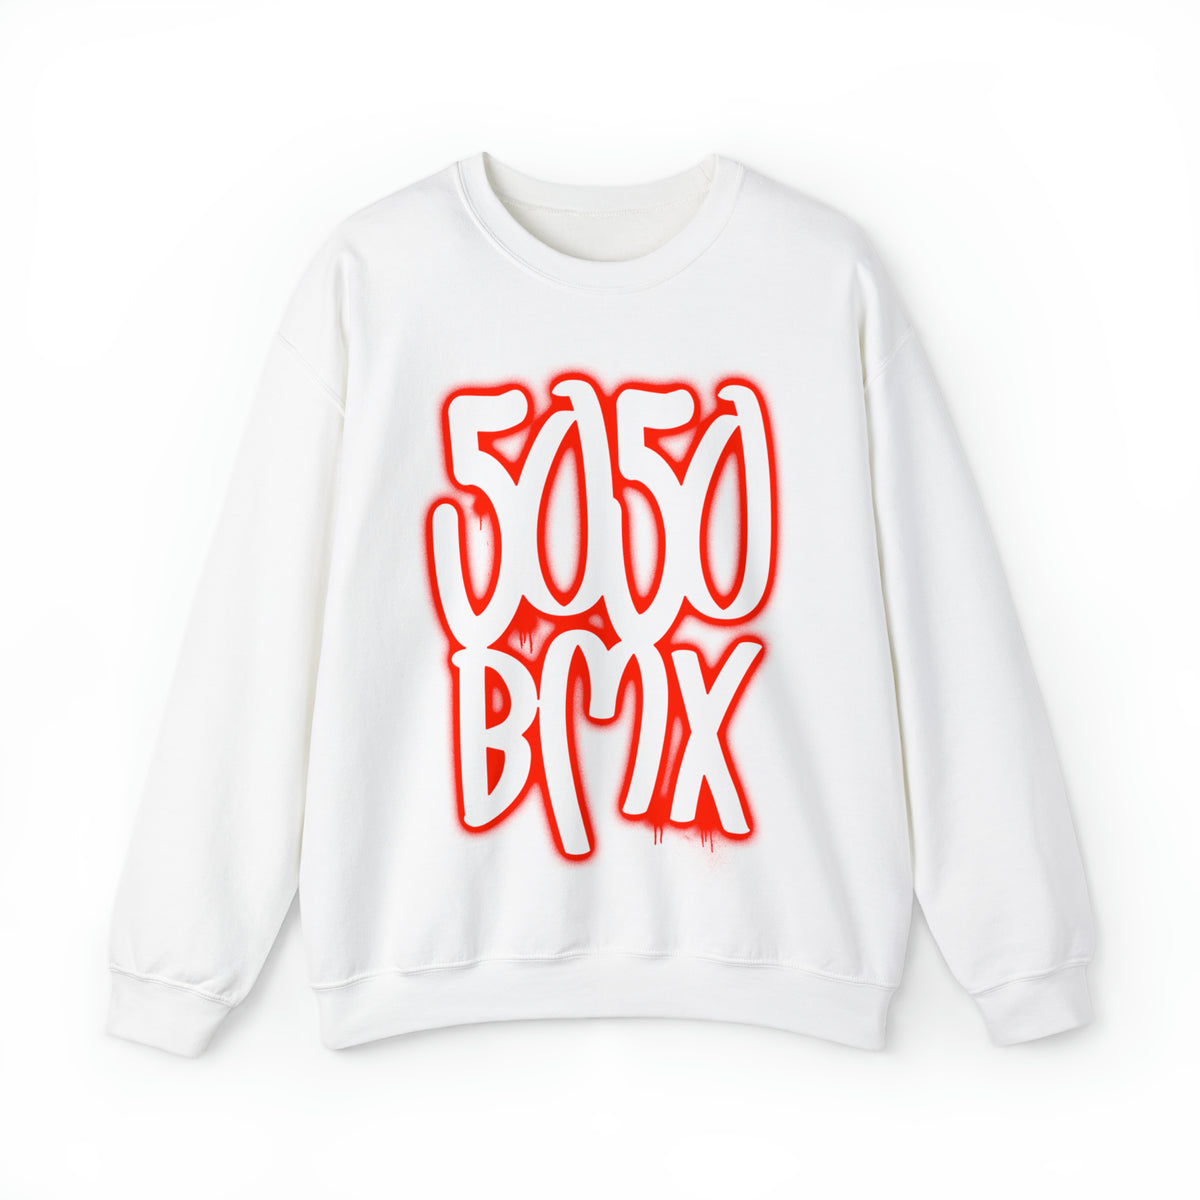 5050bmx Graffiti Crewneck Sweatshirt (Red)